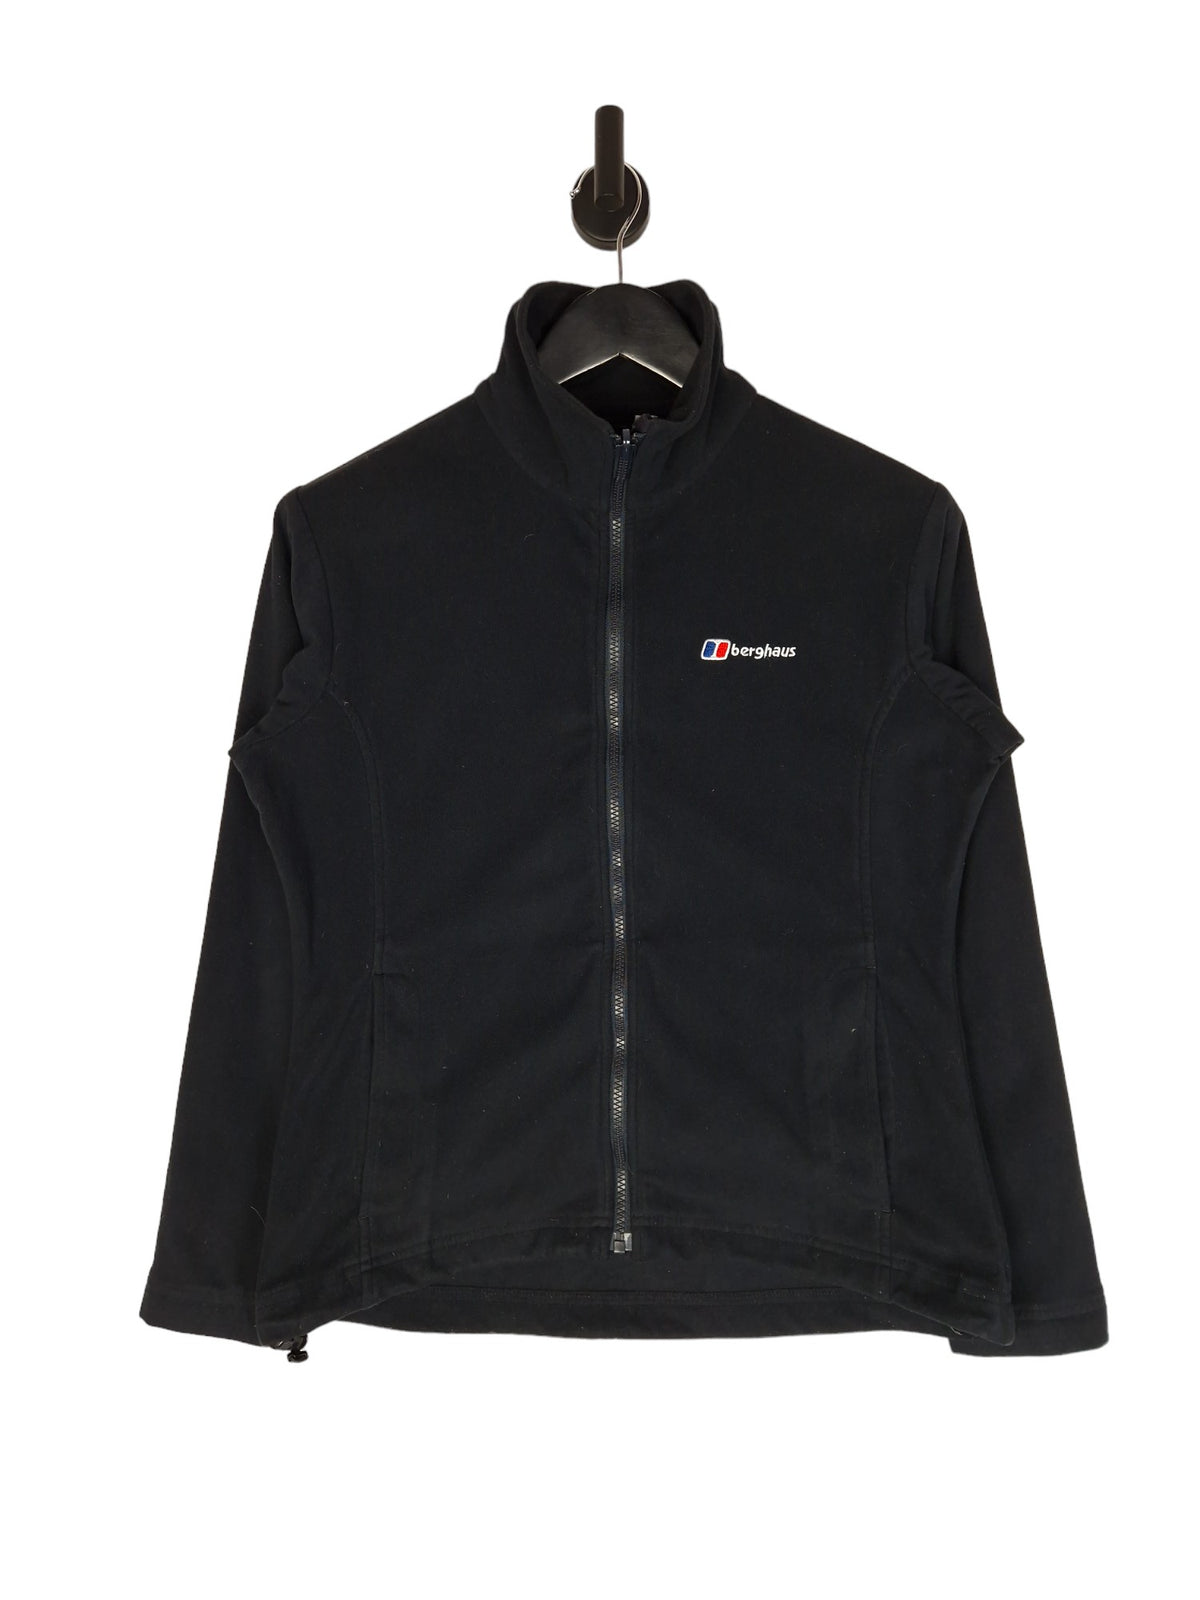 Berghaus Fleece Jacket - Size UK 12